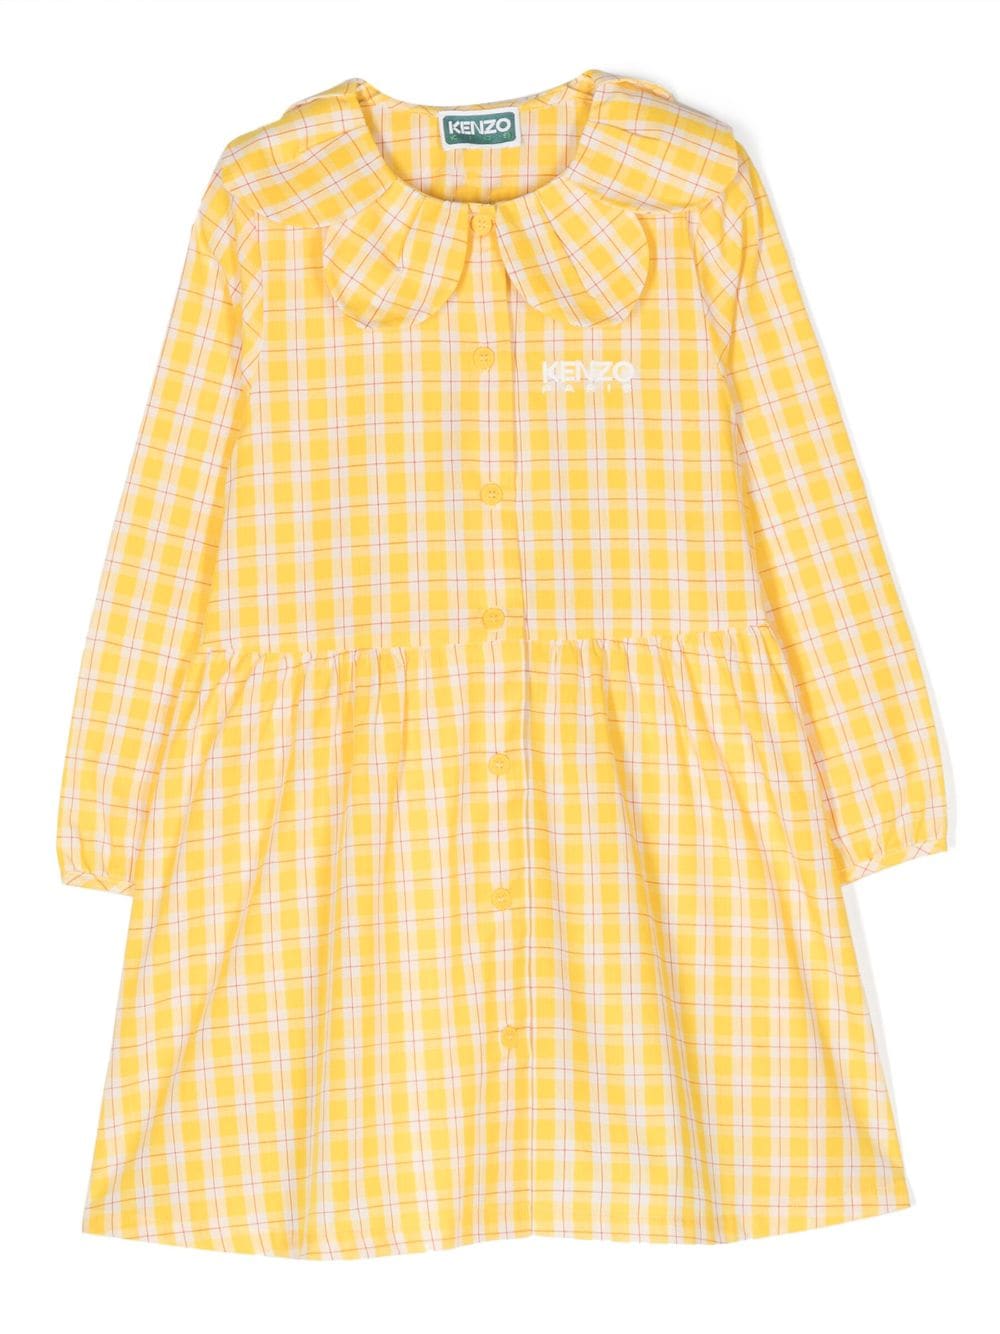 Kenzo Kids plaid-check pattern dress - Yellow von Kenzo Kids